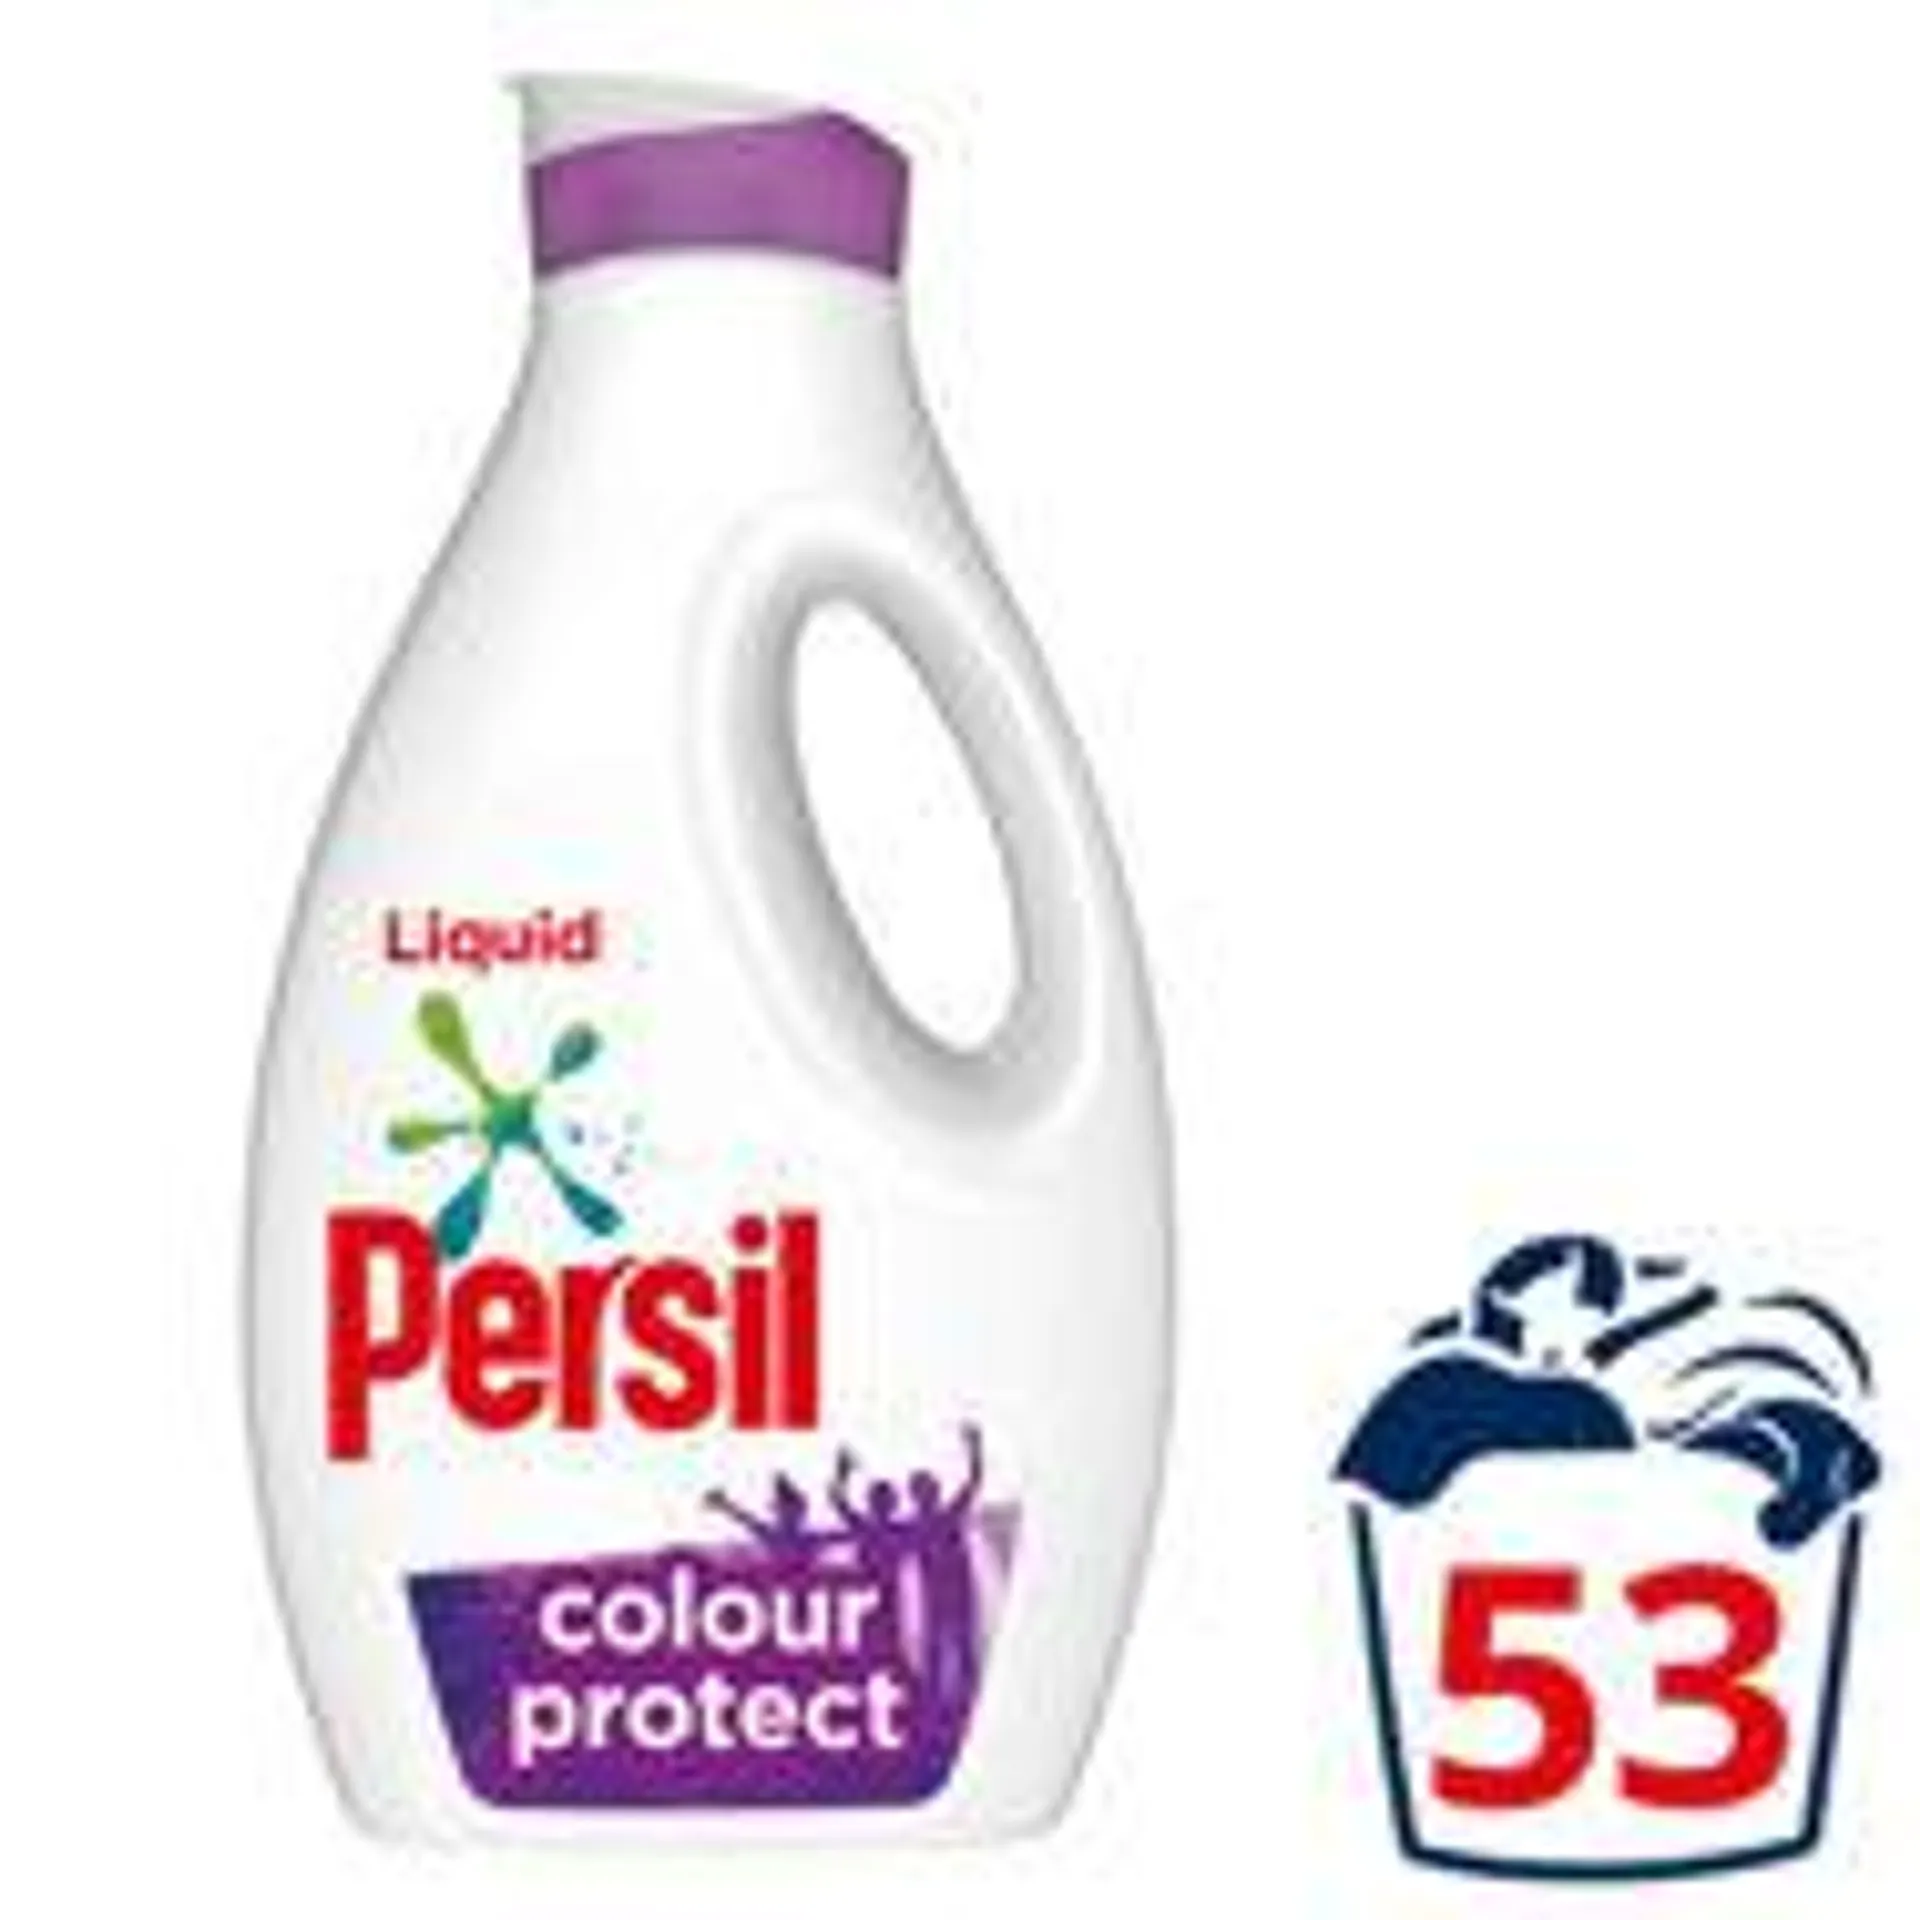 Persil Colour Laundry Washing Liquid Detergent 53 Wash